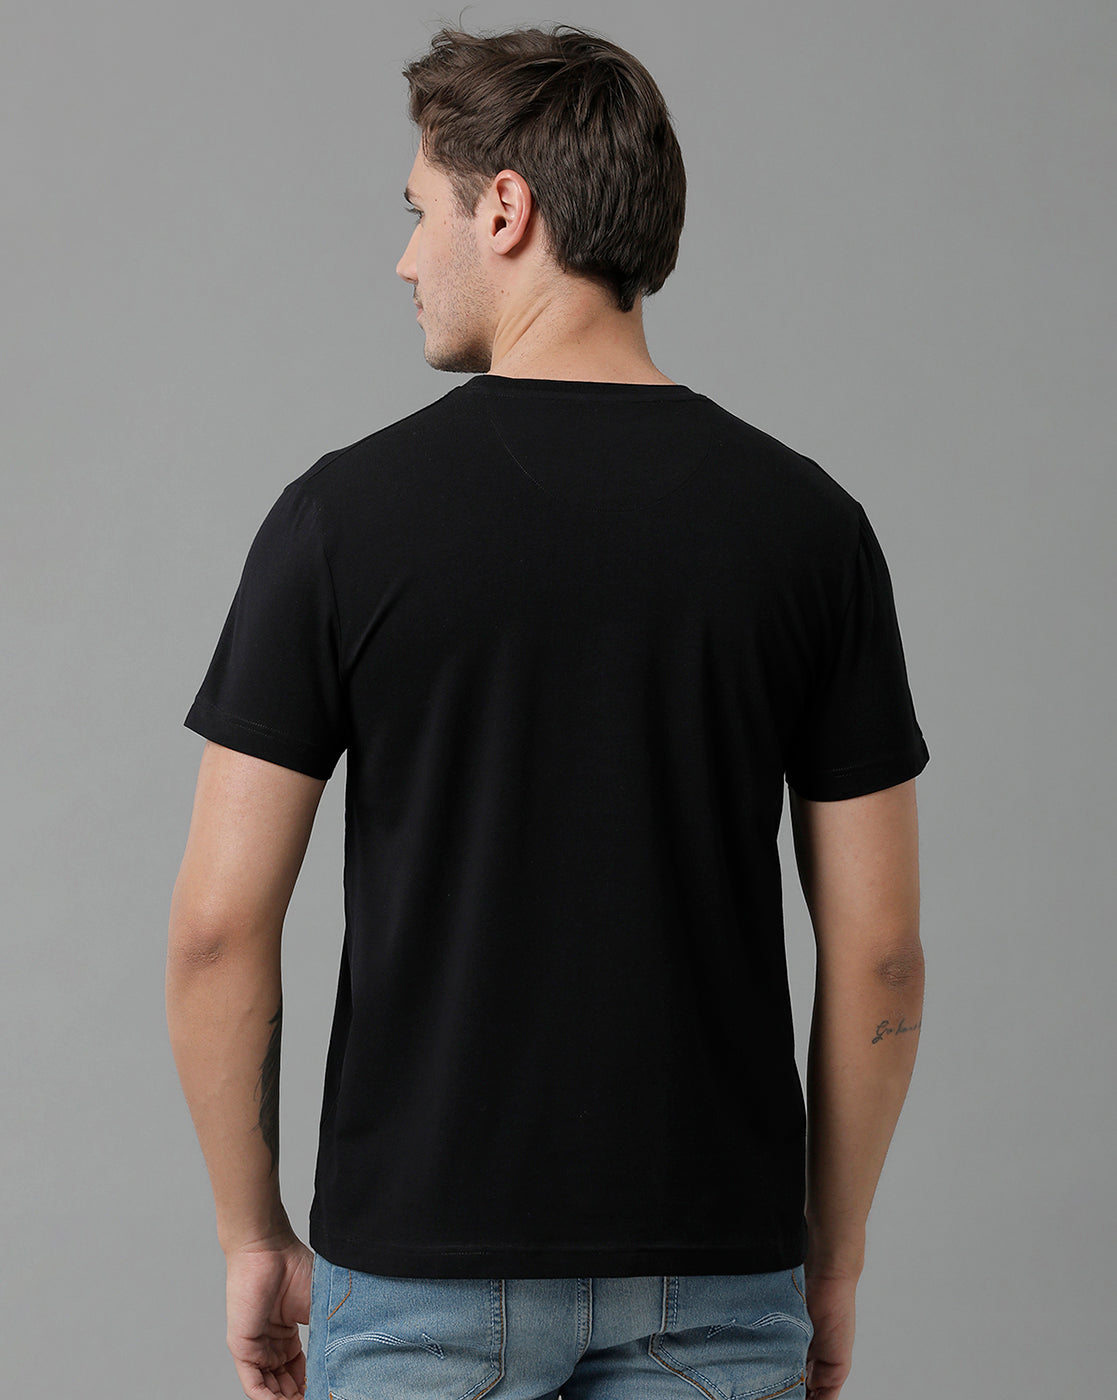 CP BRO Men's Cotton Half Sleeve Printed Slim Fit Round Neck Black Color T-Shirt | Brcn - 526 A